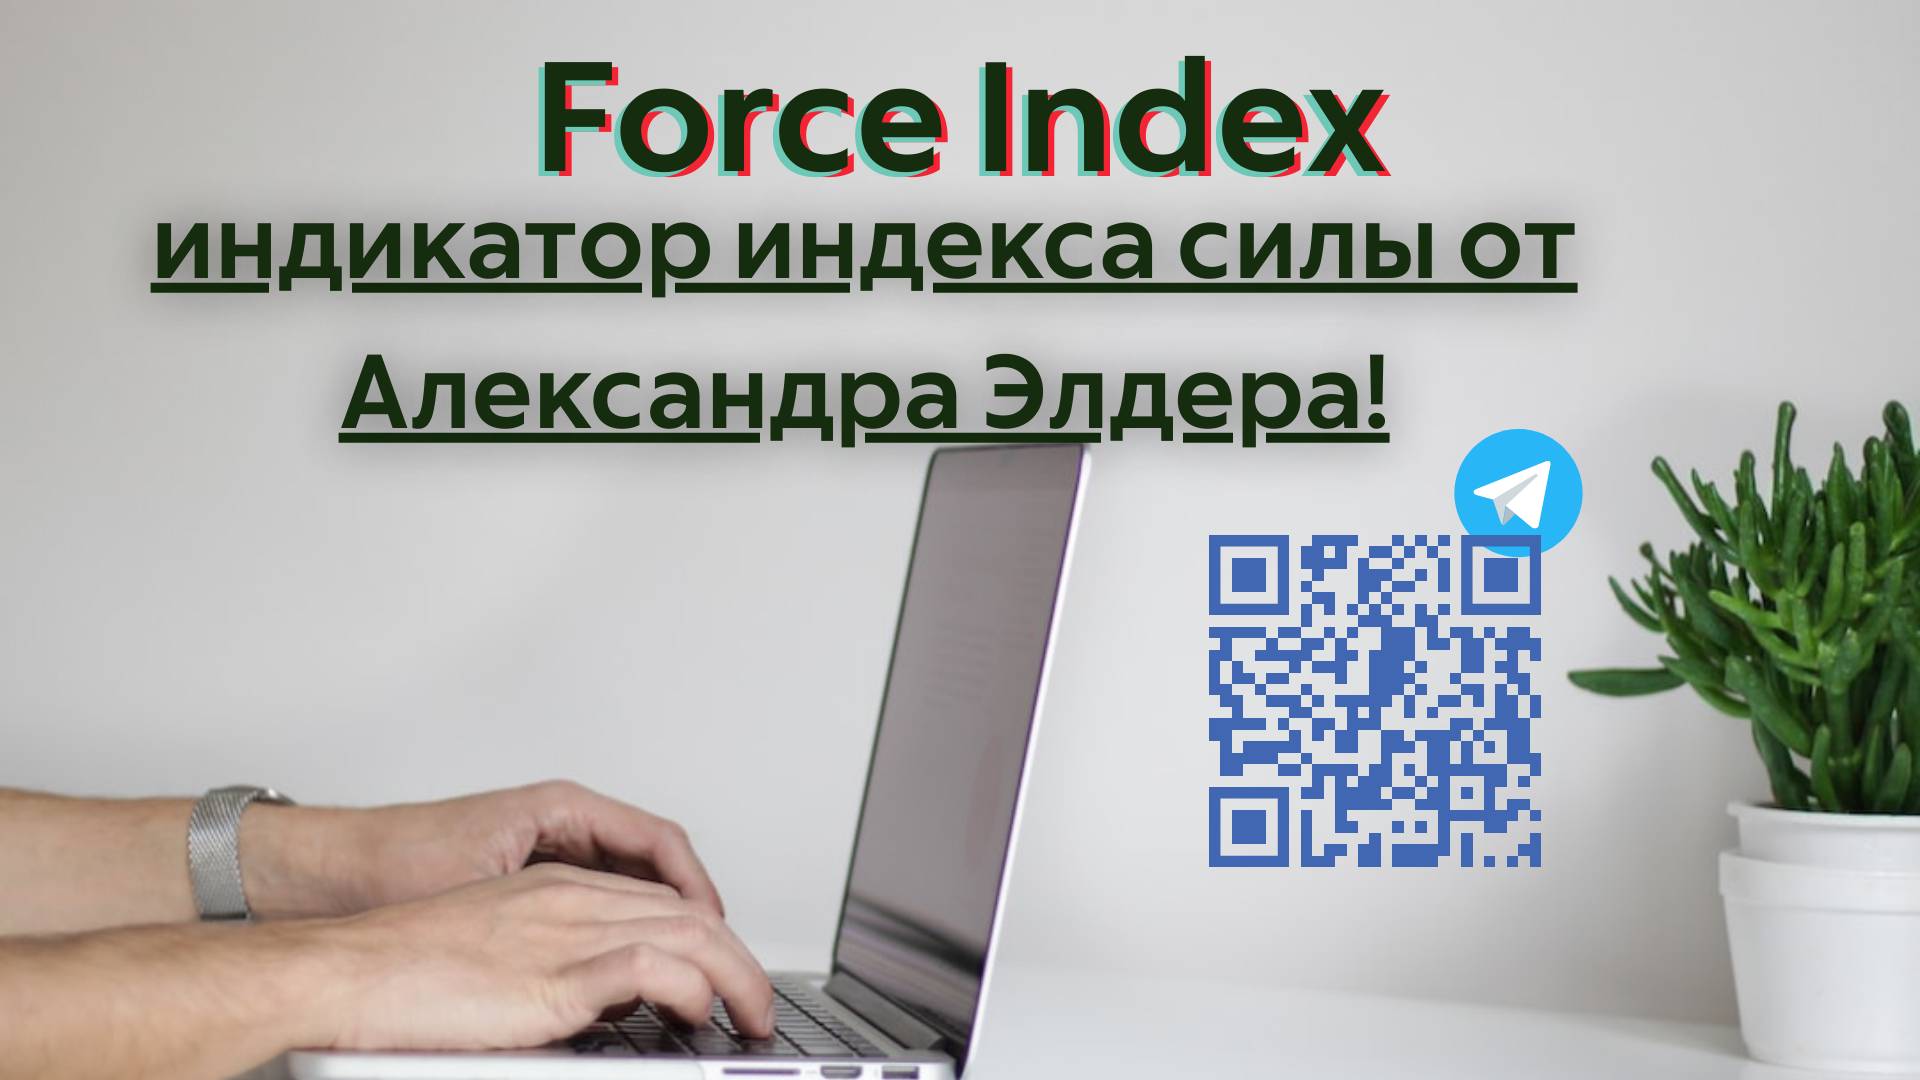 Индикатор Force Index (индекс силы) Александра Элдера.